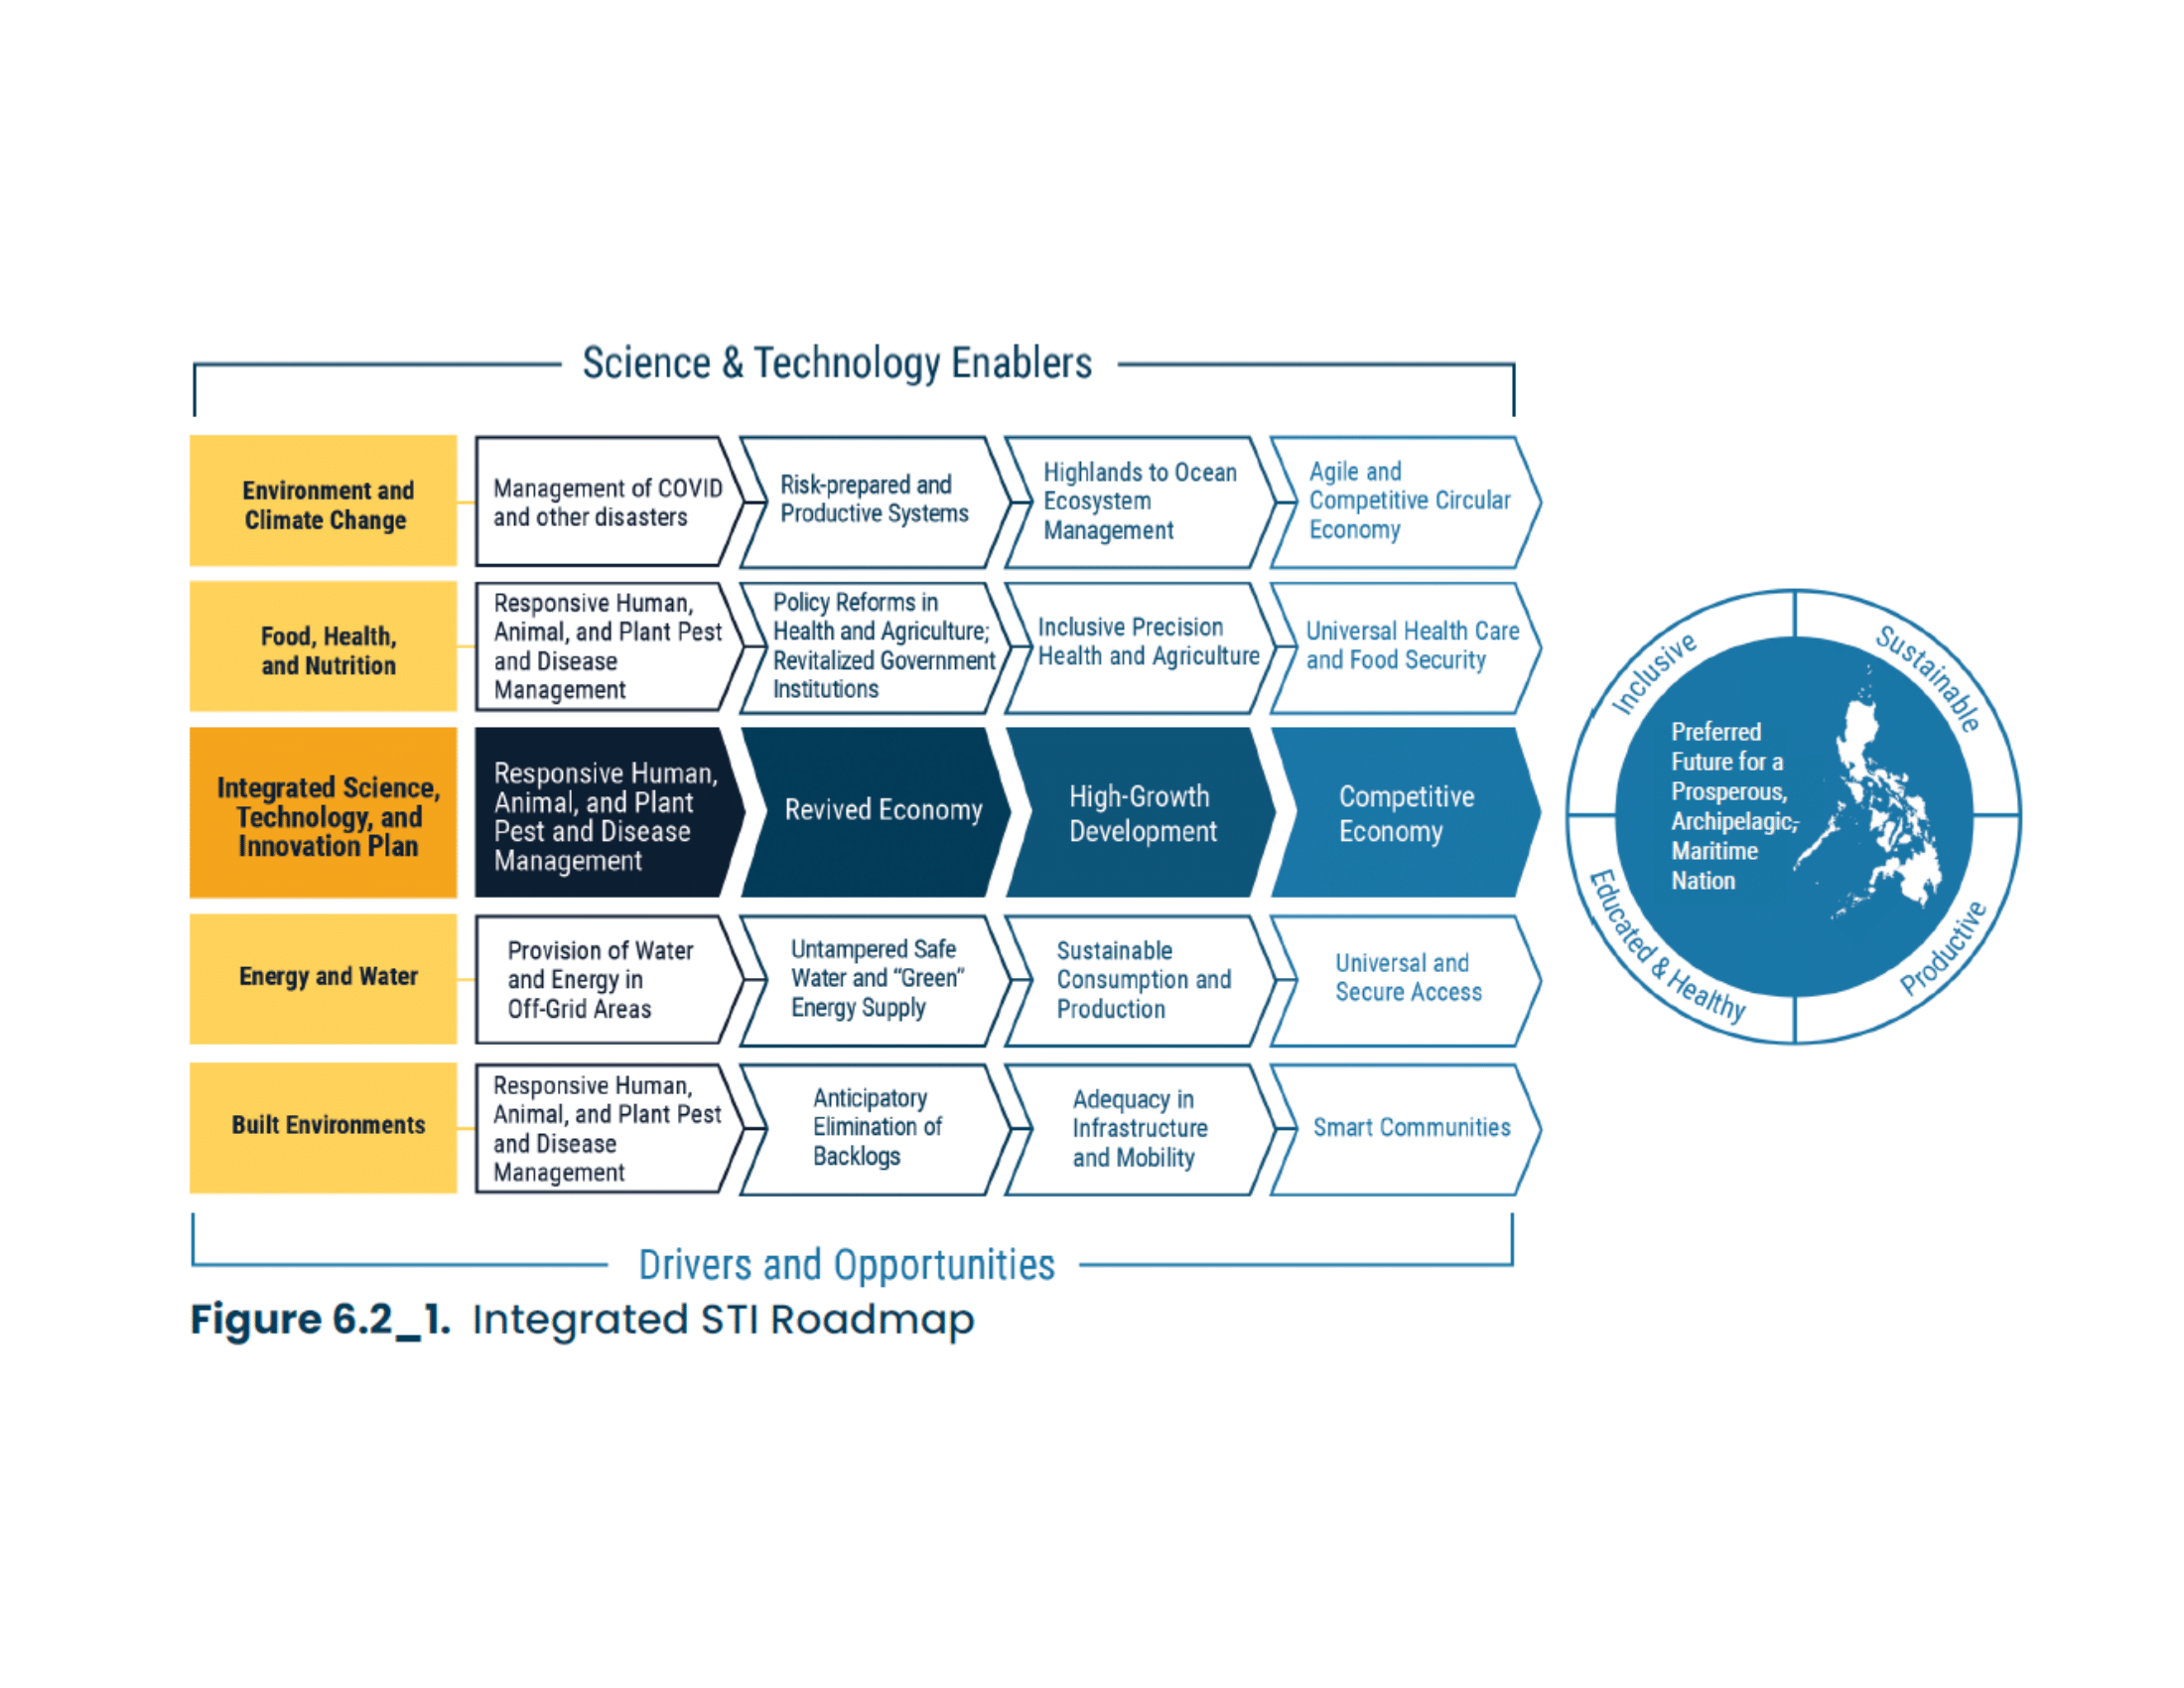 Figure 6.2 1.Integrated STI Roadmap